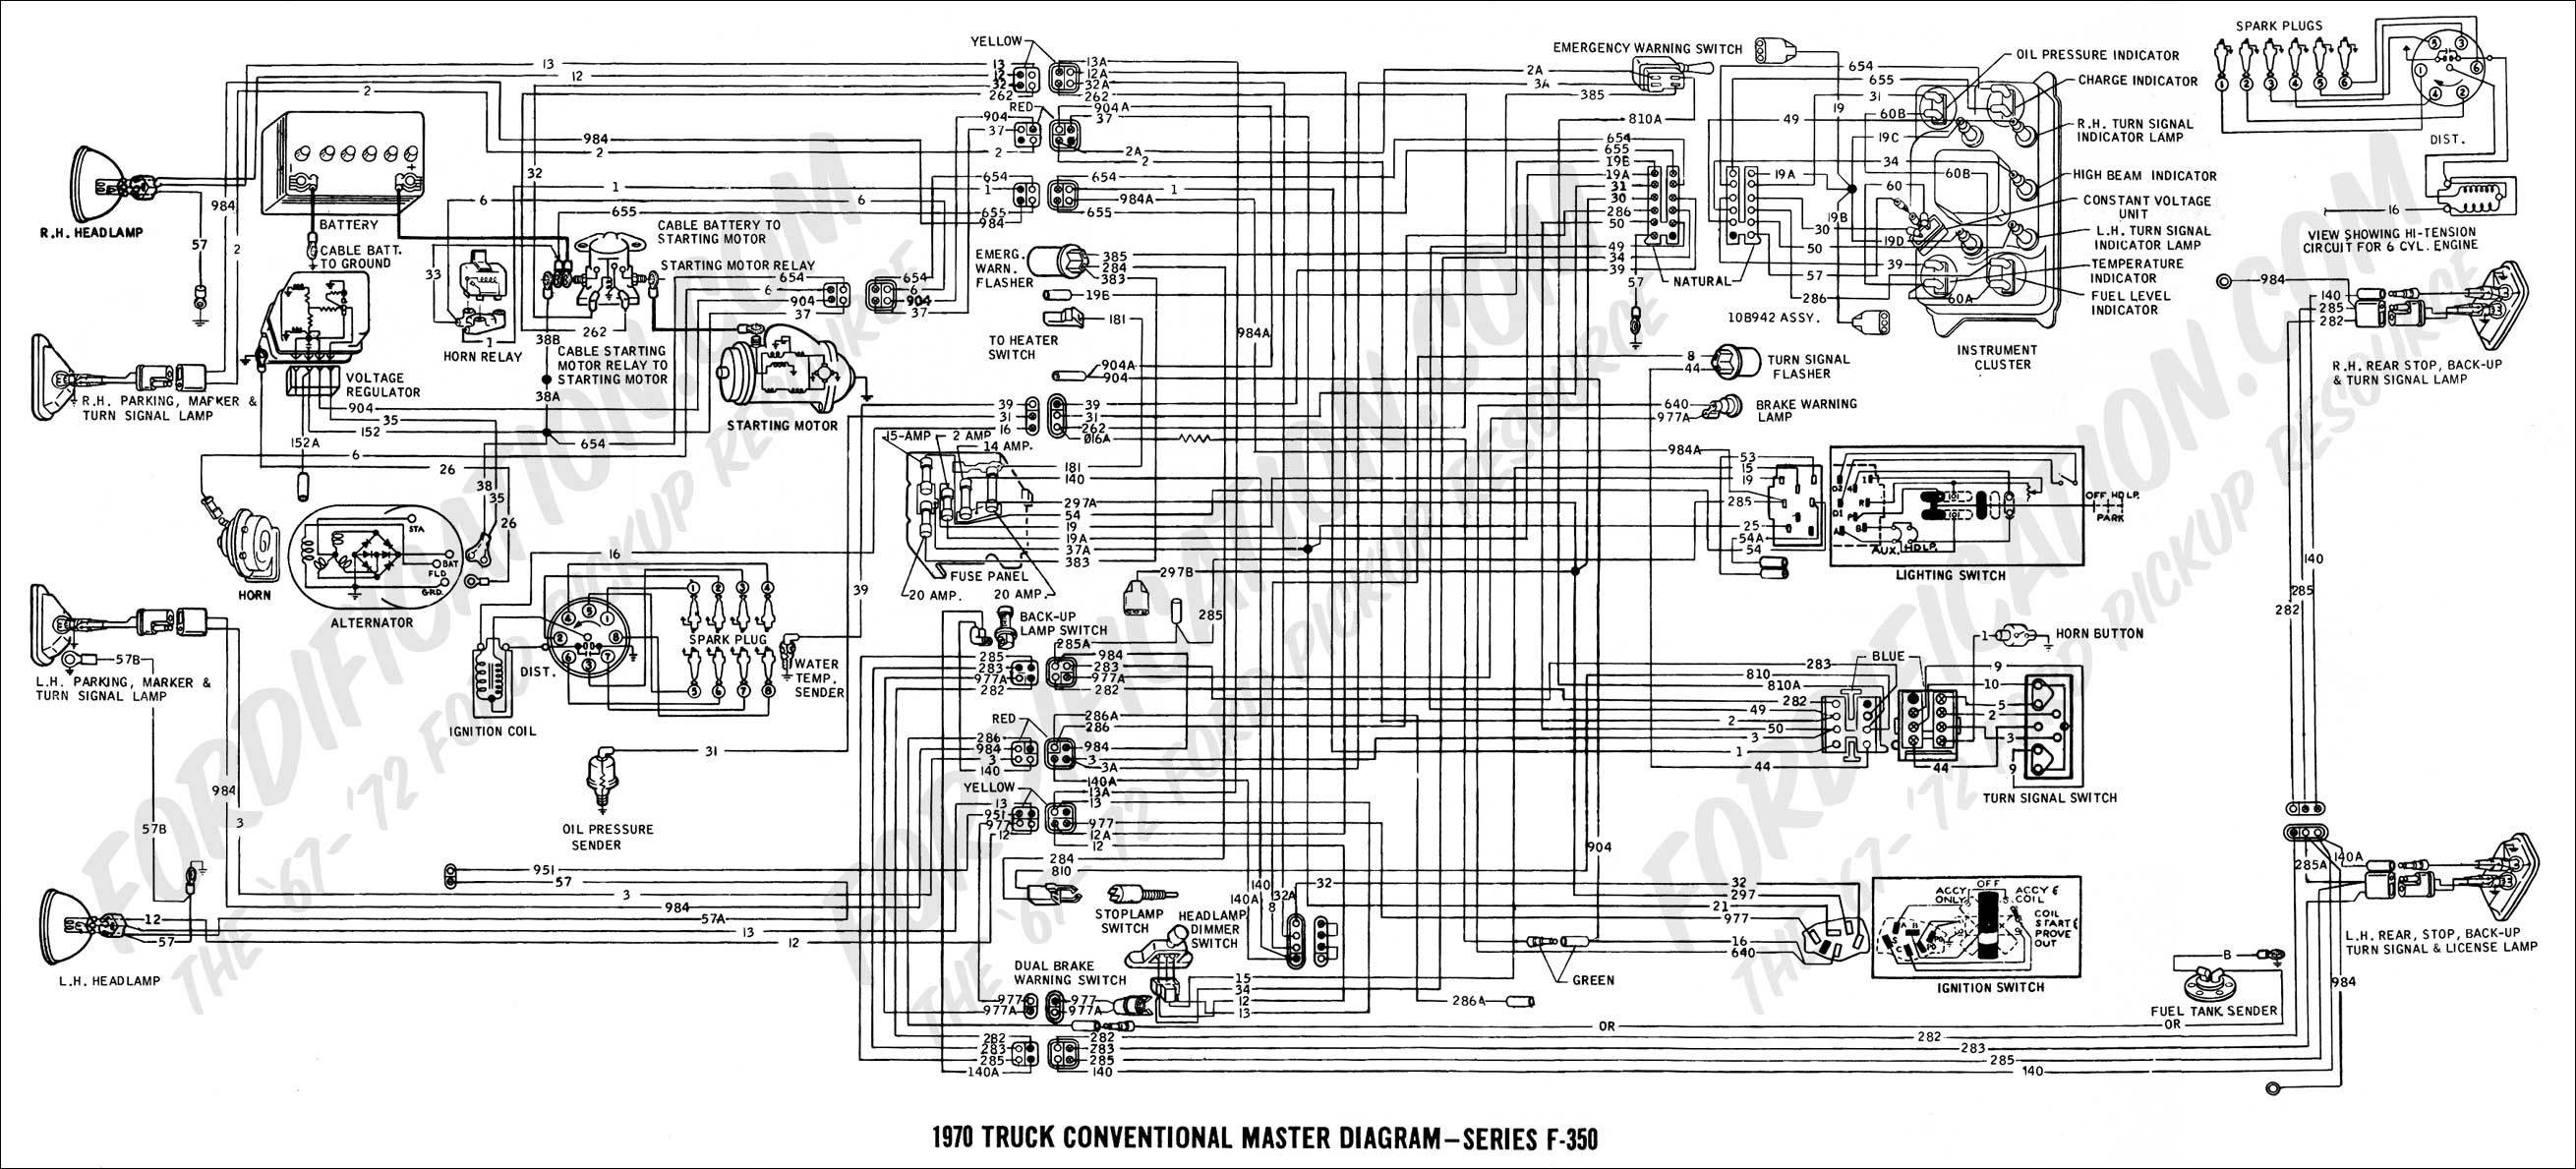 2004 Freightliner Wiring Schematic - Diagram In Pictures Database 2000